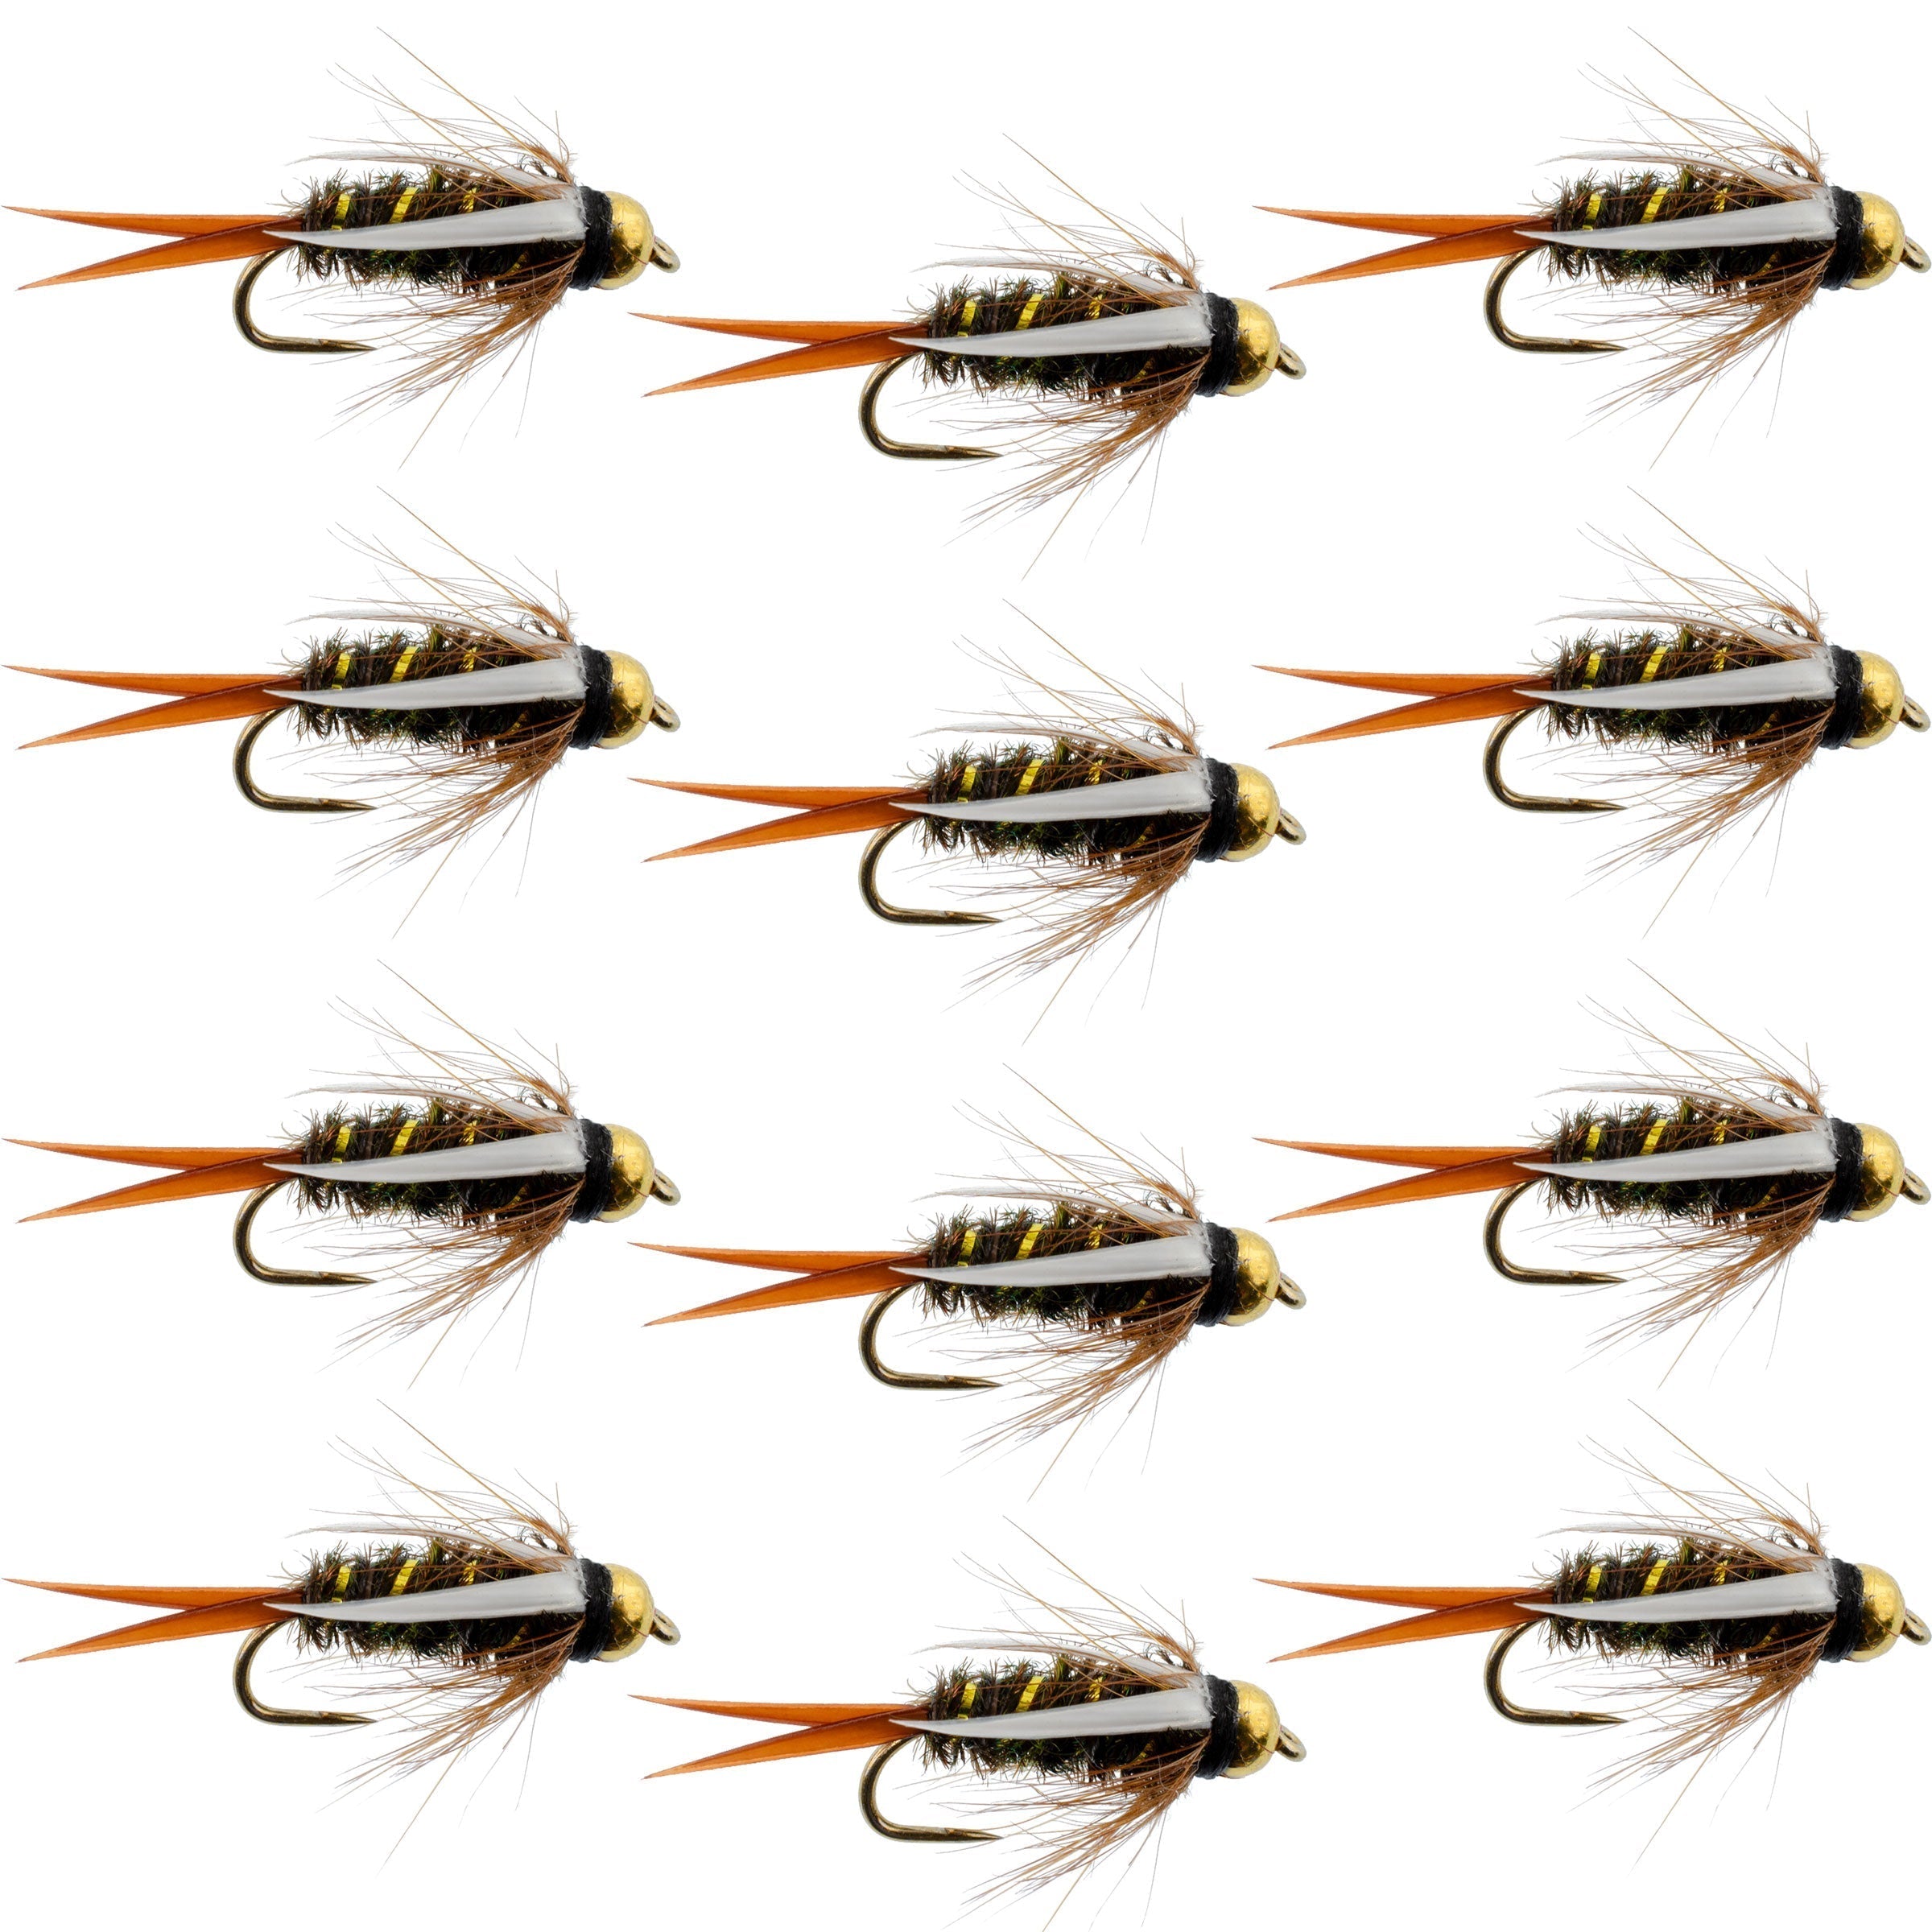 Barbless Bead Head Prince Nymph Fly Fishing Flies - 1 Dozen Flies Hook Size 10